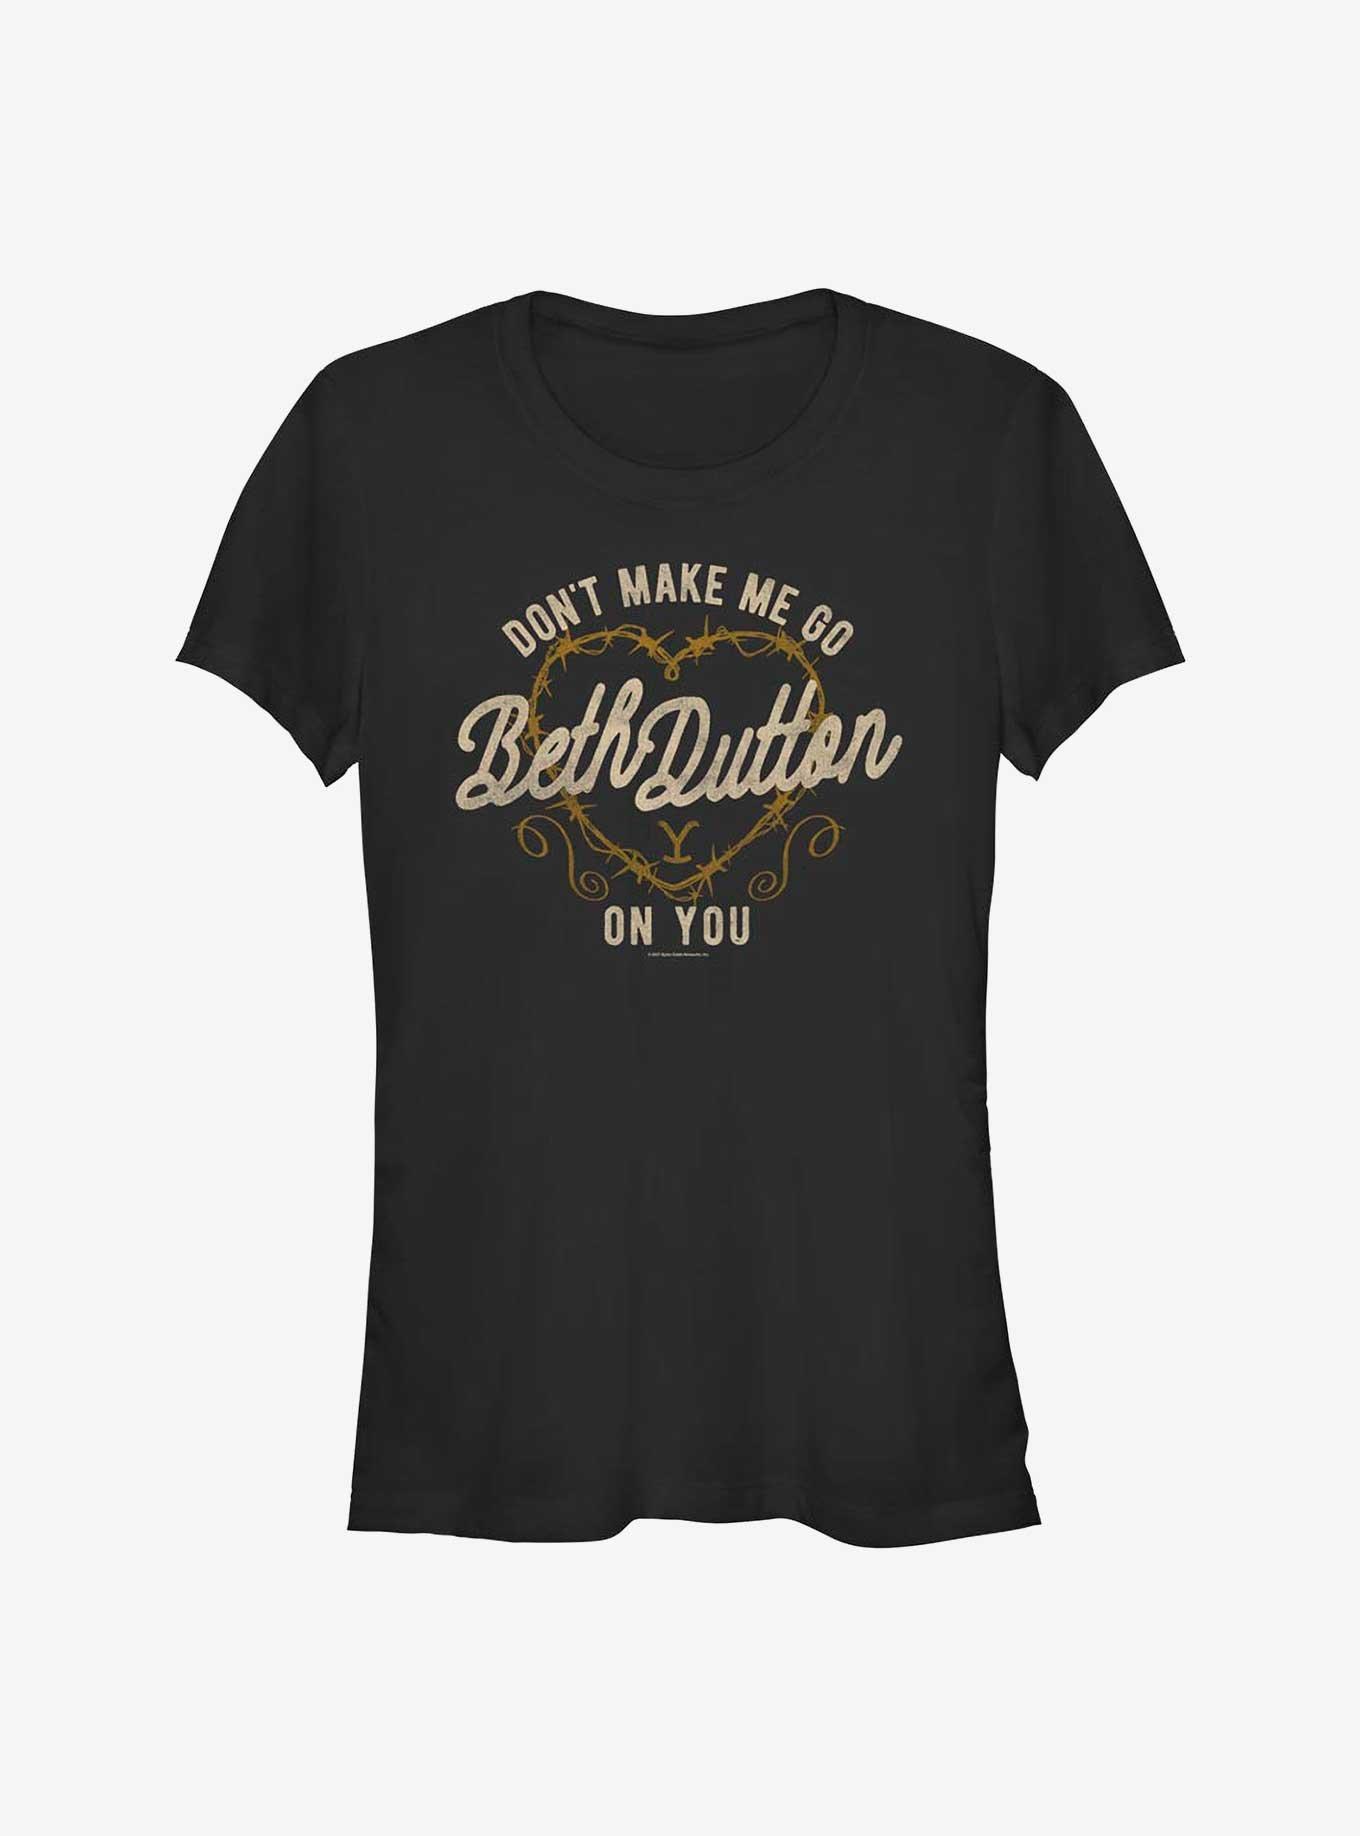 Yellowstone Go Beth Dutton Girls T-Shirt, CHARCOAL, hi-res